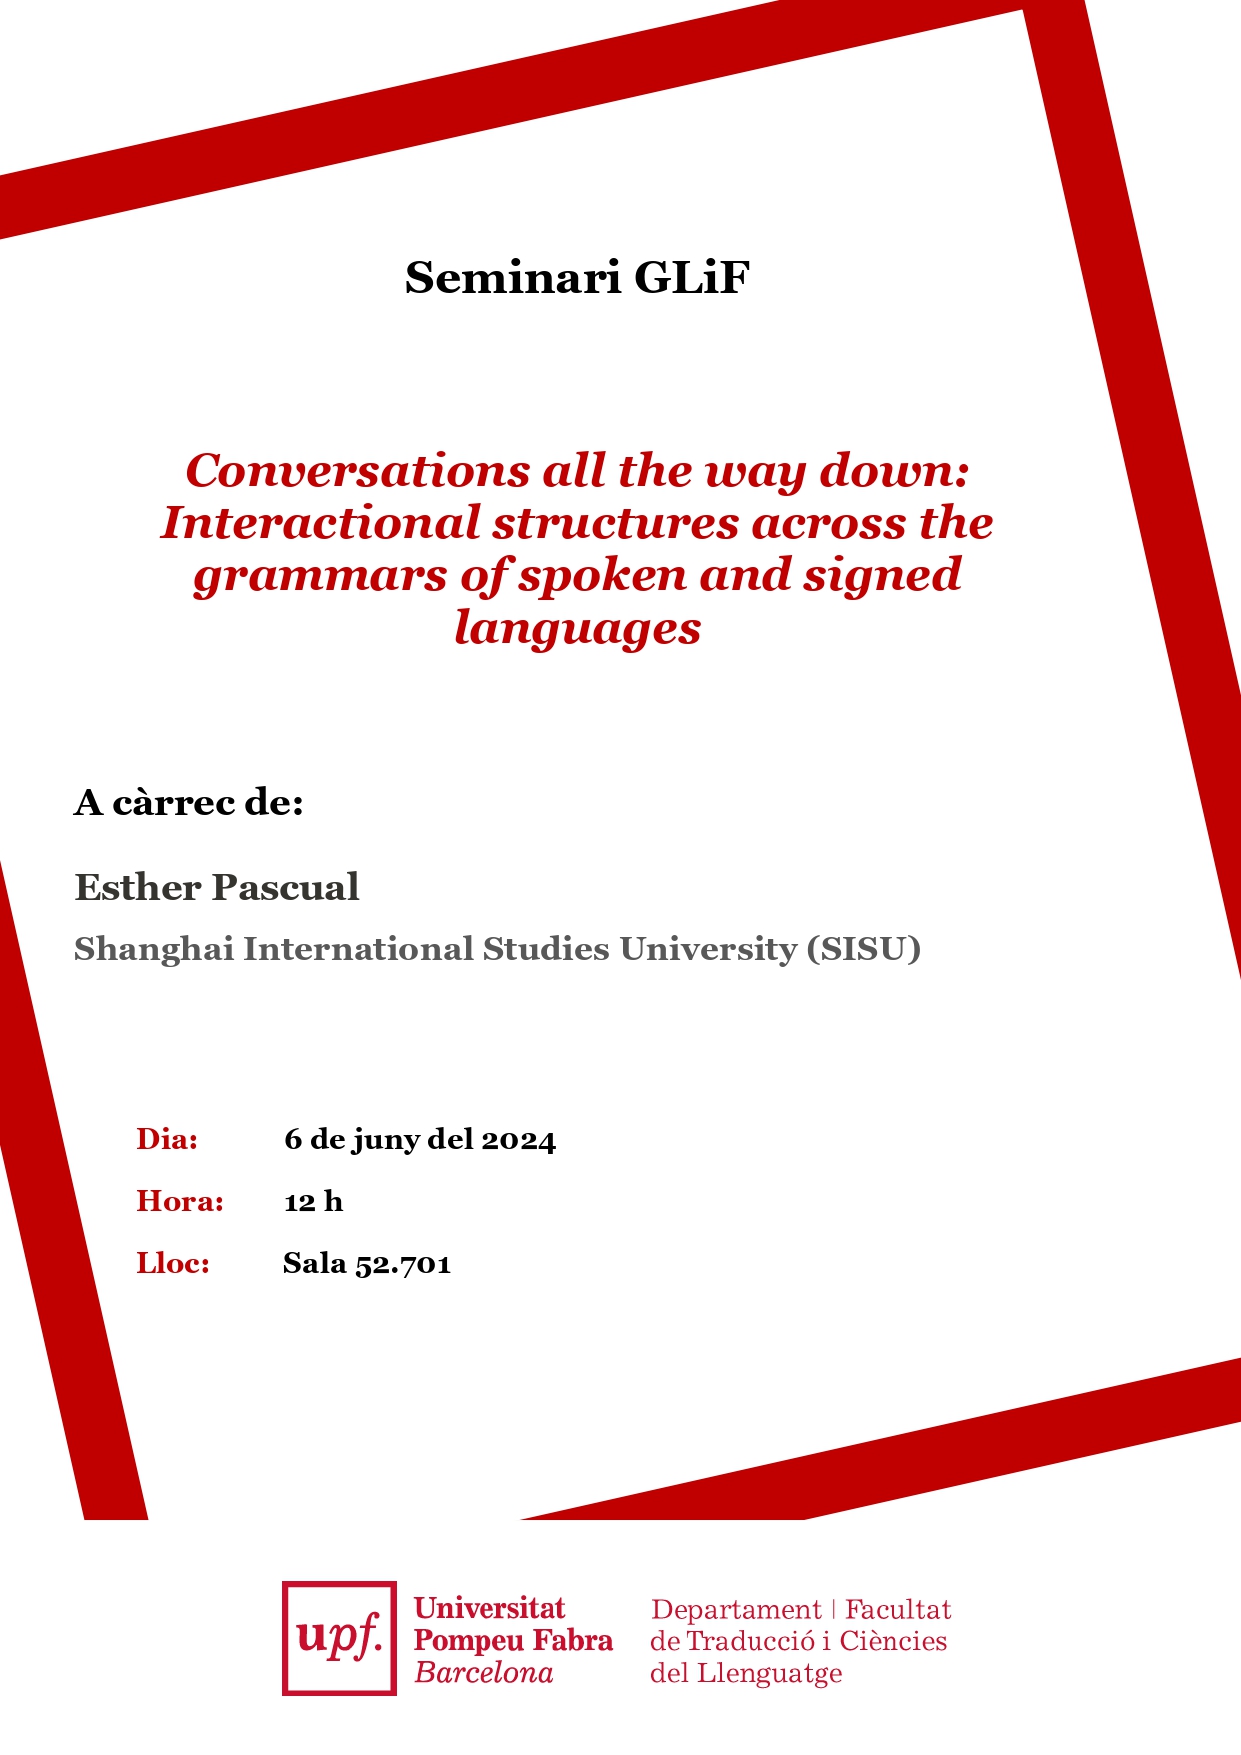 06/06/2024 Seminari GLiF, a càrrec d'Esther Pascual, Shanghai International Studies University (SISU)